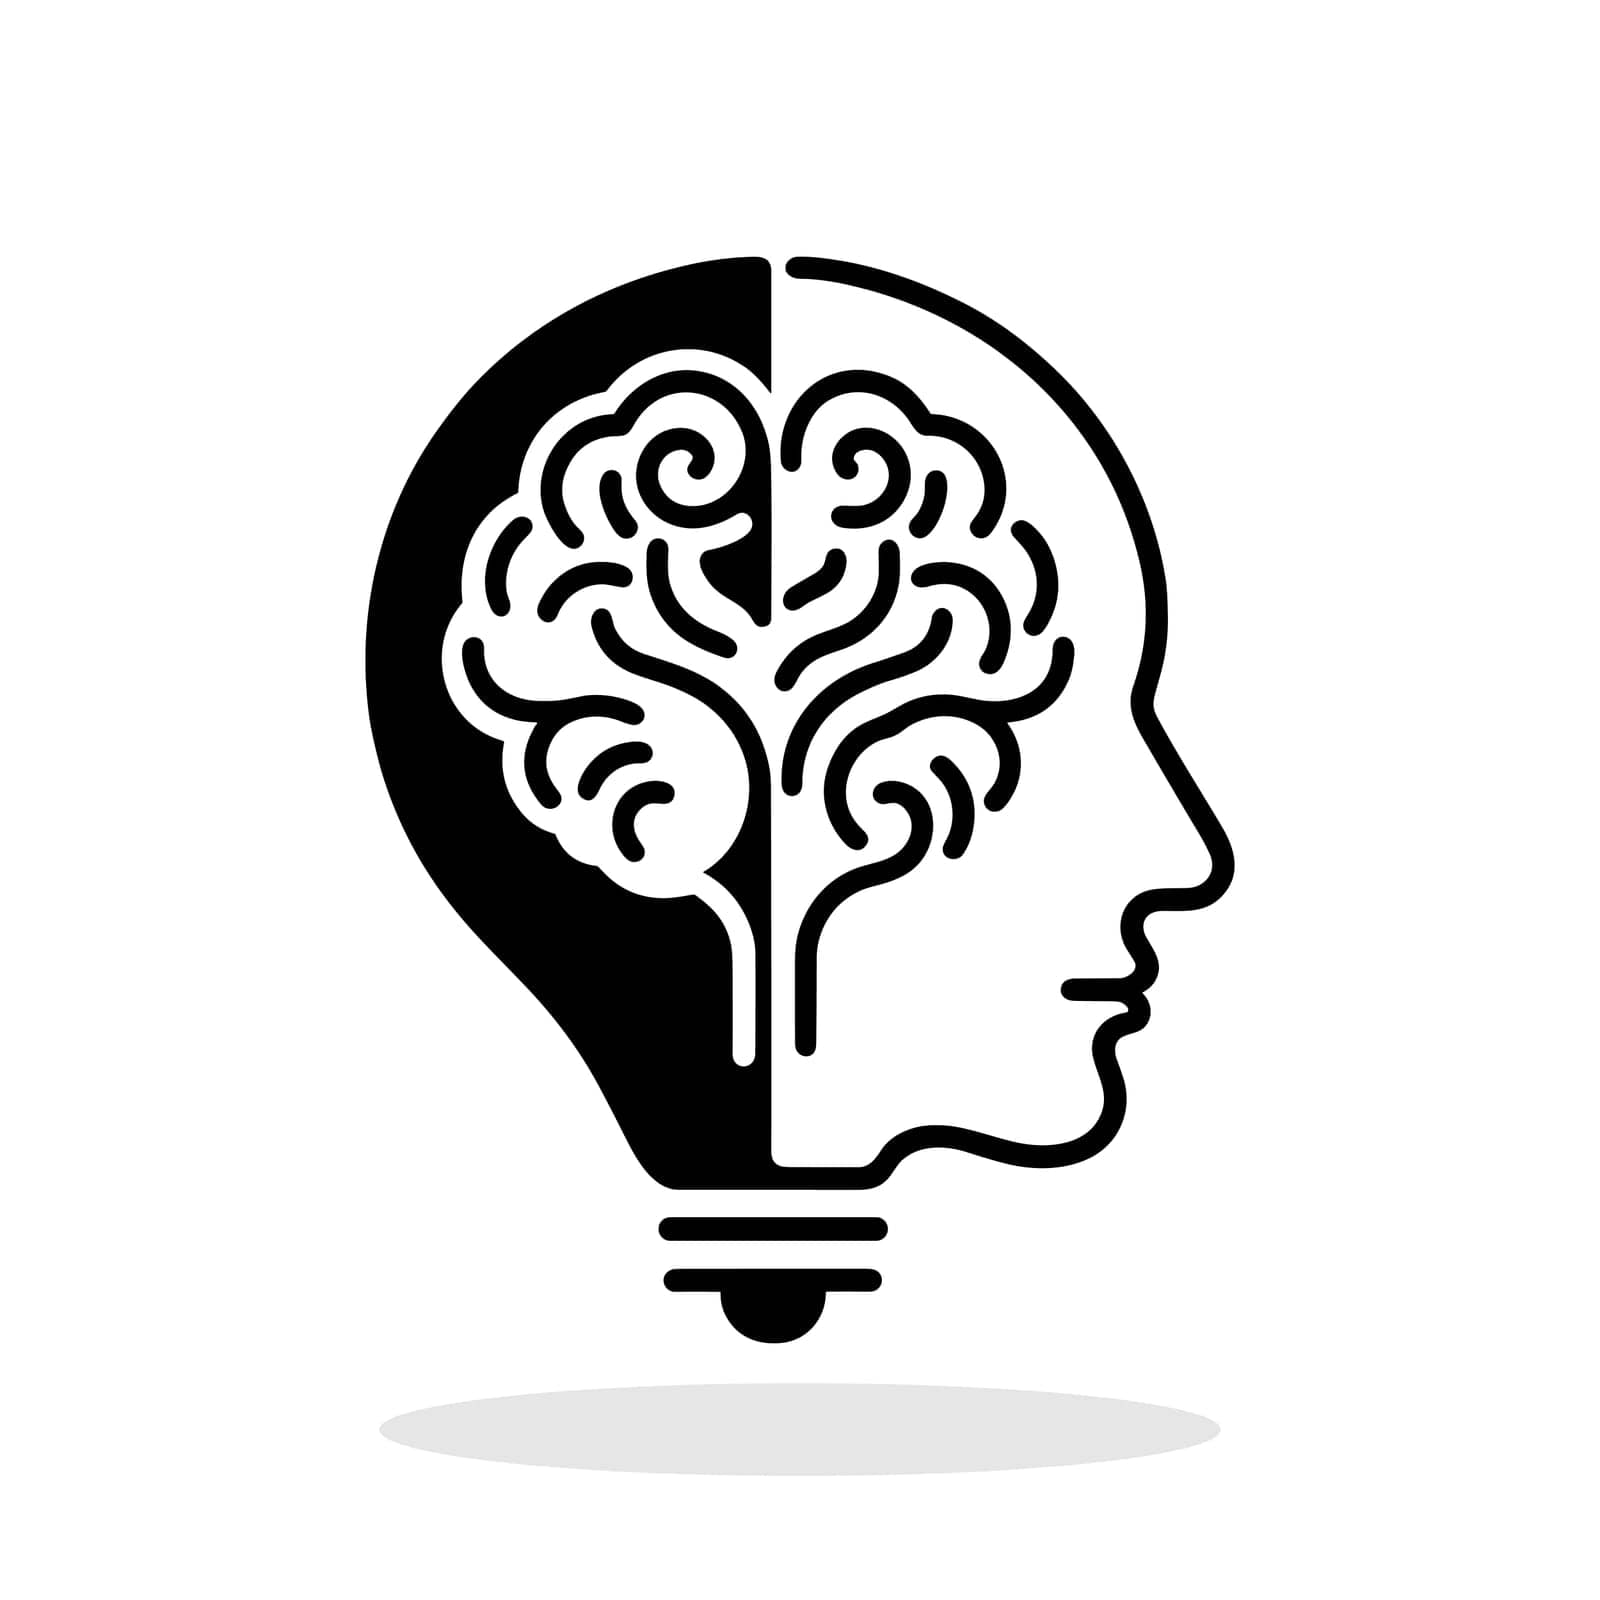 Light bulb and brain icon. Creativity symbol. Innovation symbol. by Chekman